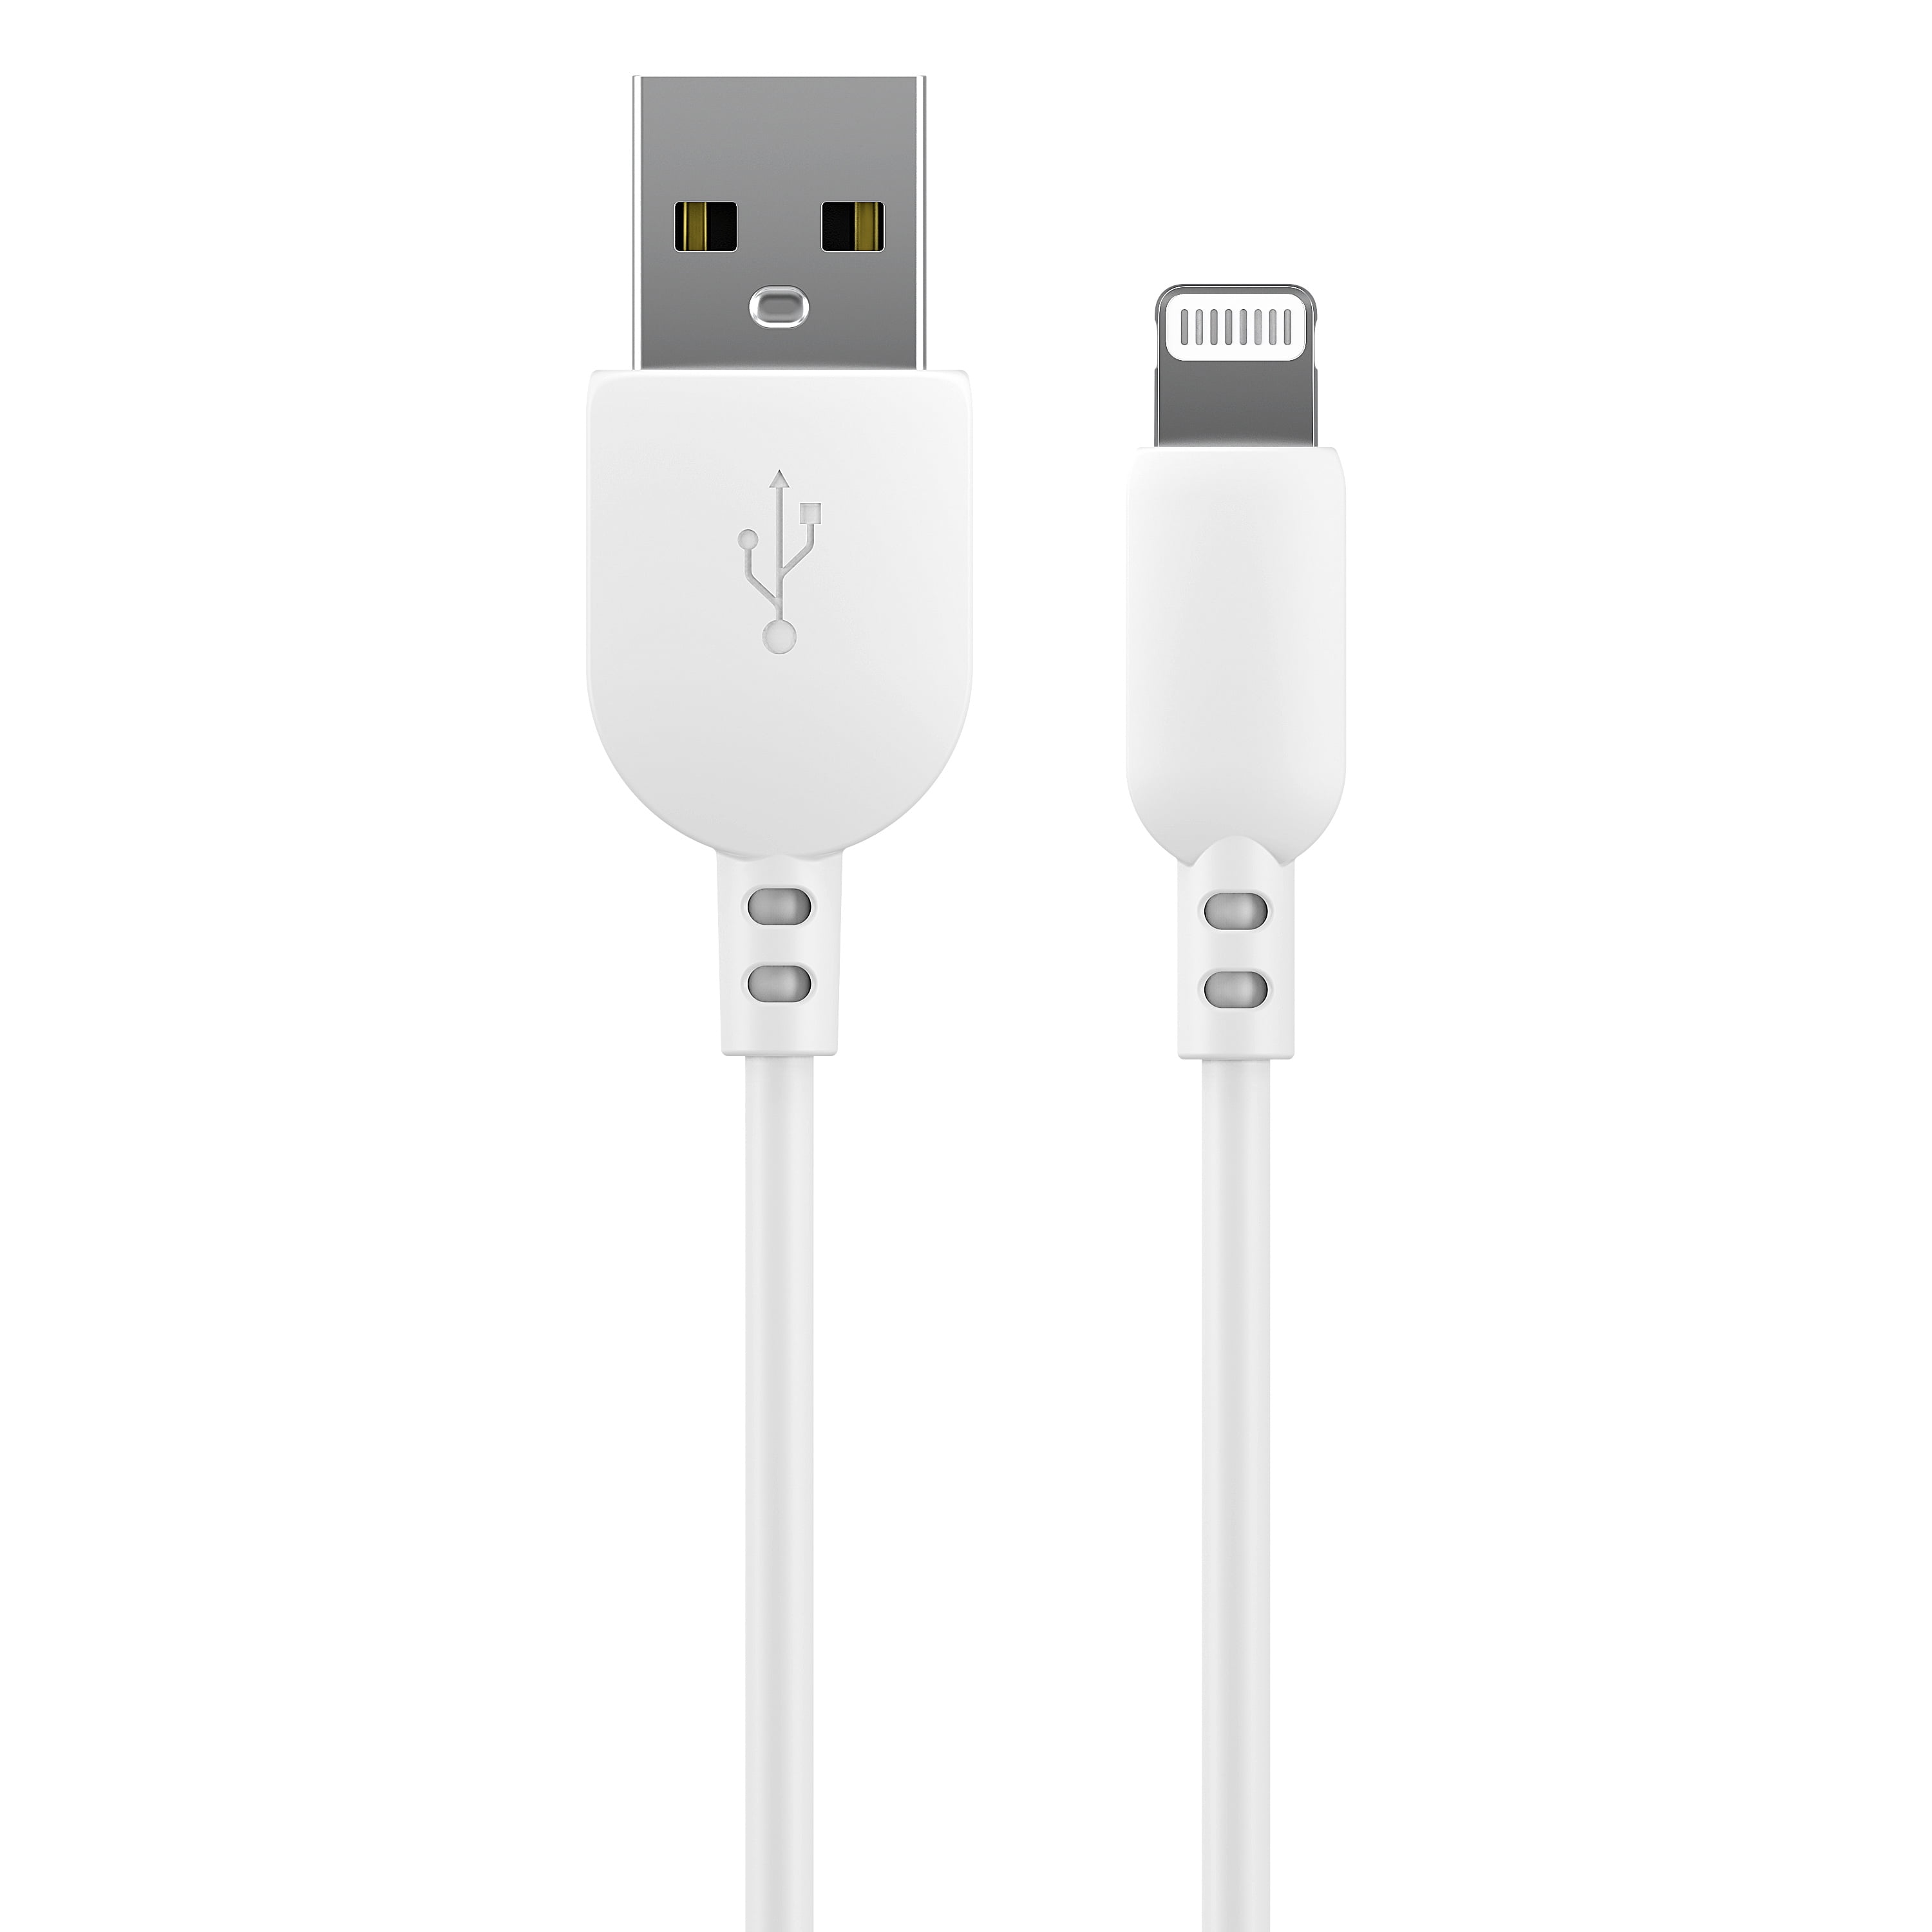 Onn. Lightning to USB Cable - White - 3 ft